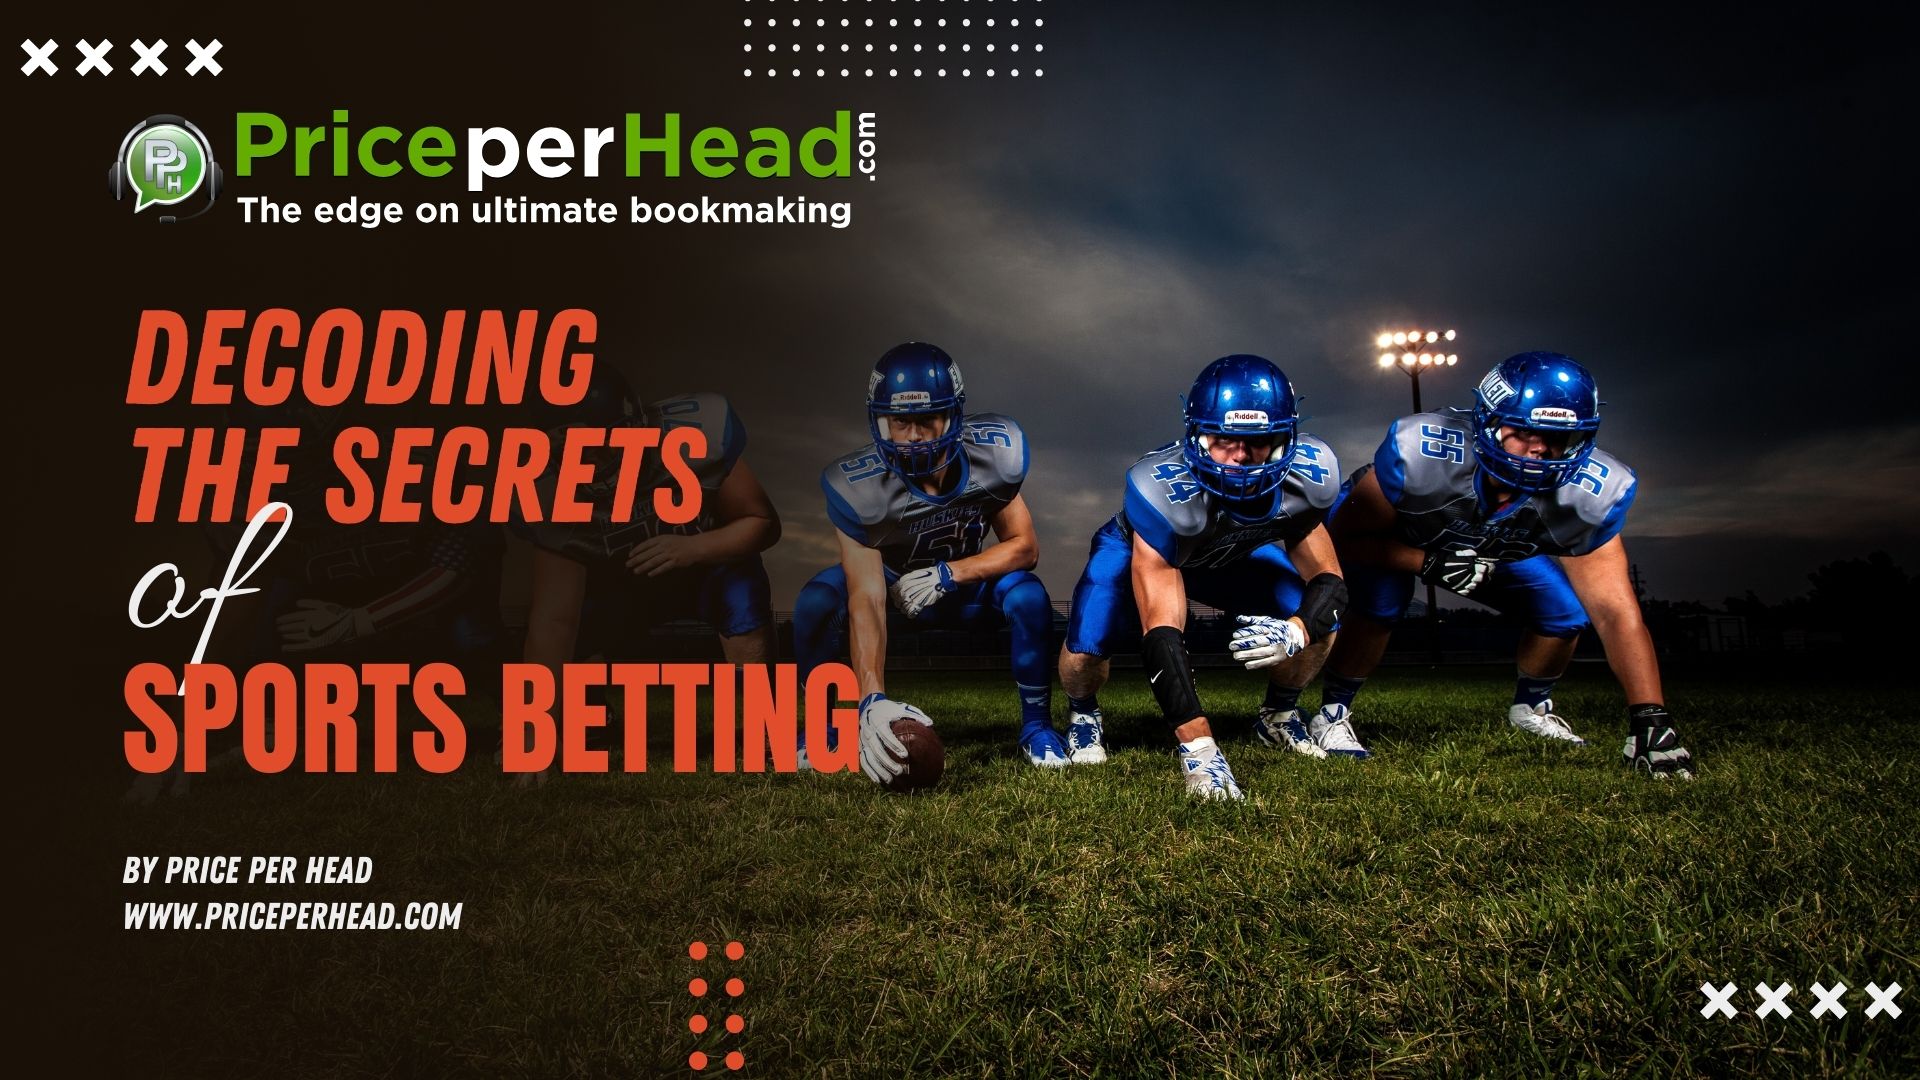 pay per head, price per head, decoding the secrets of sports betting